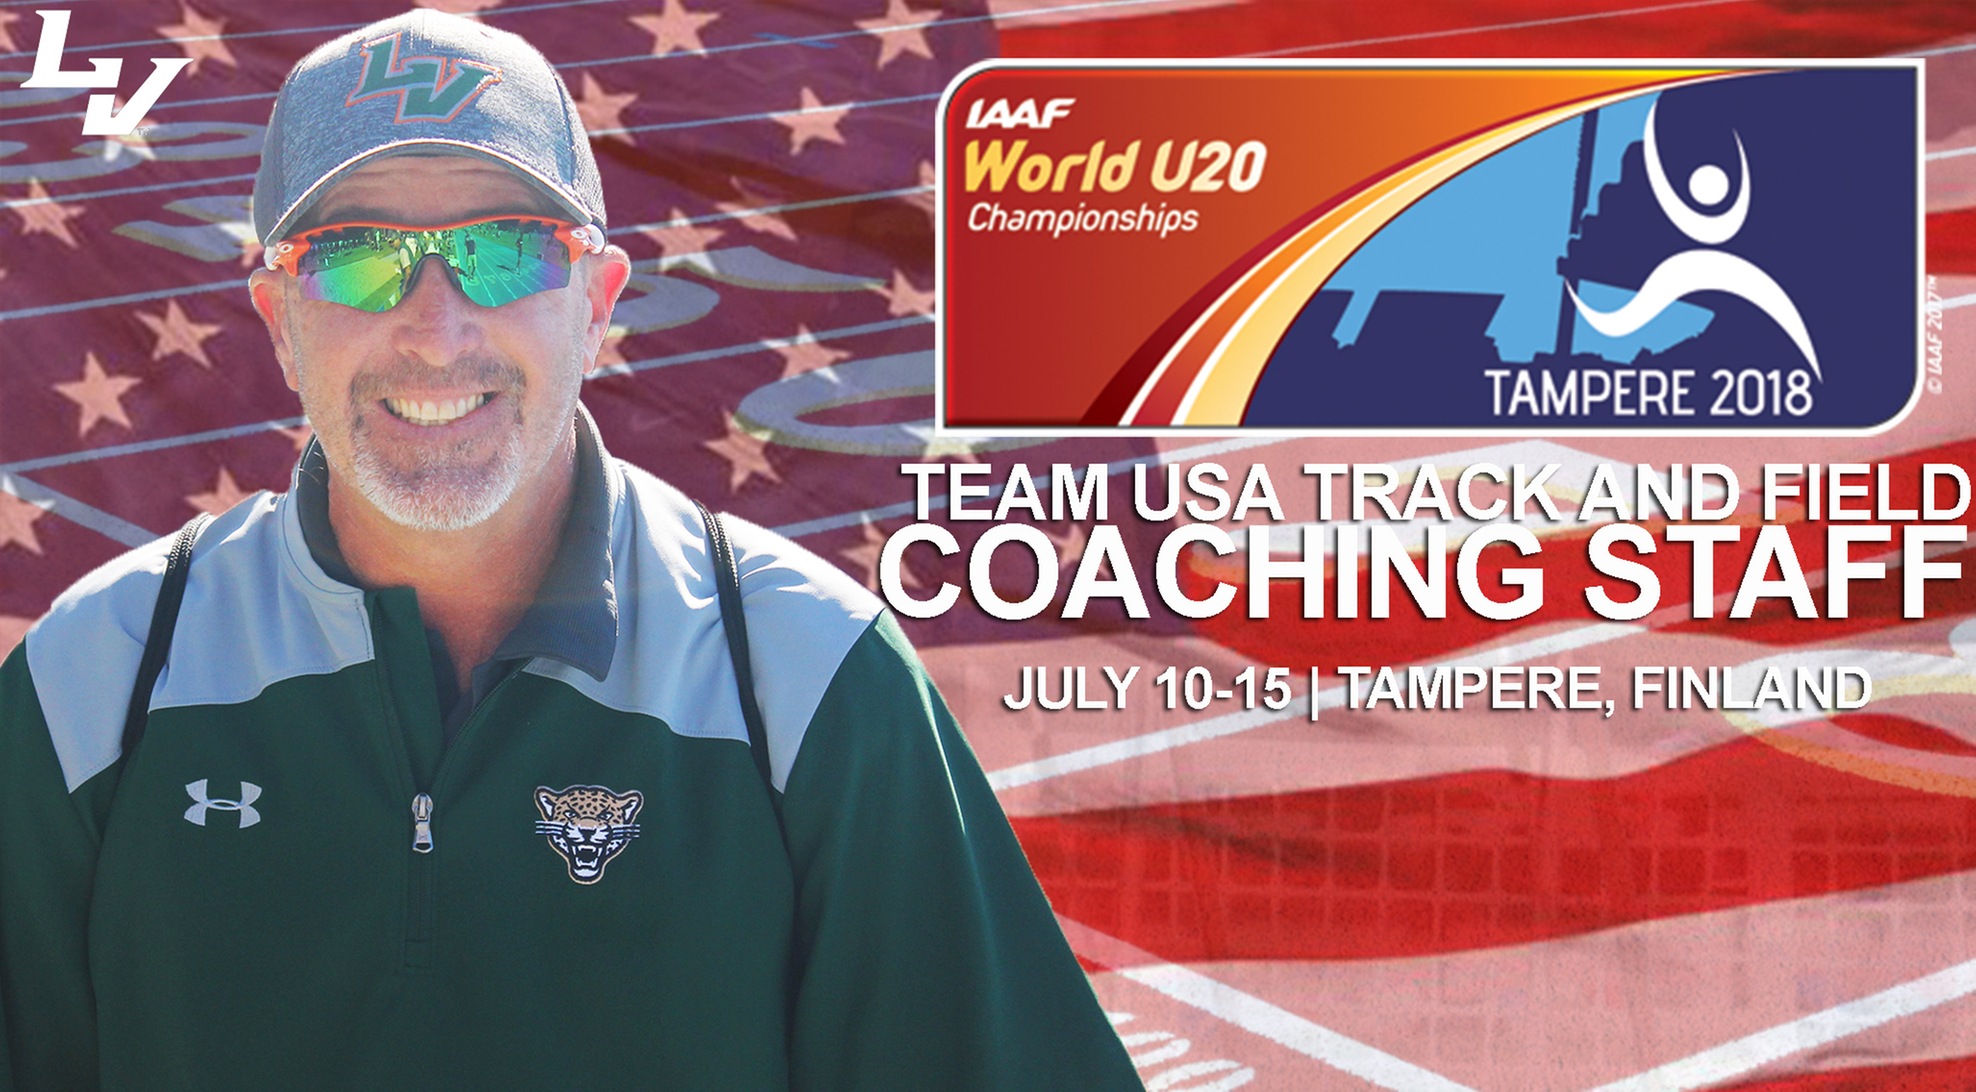 Reid Named to USATF coaching staff for IAAF U20 Championships